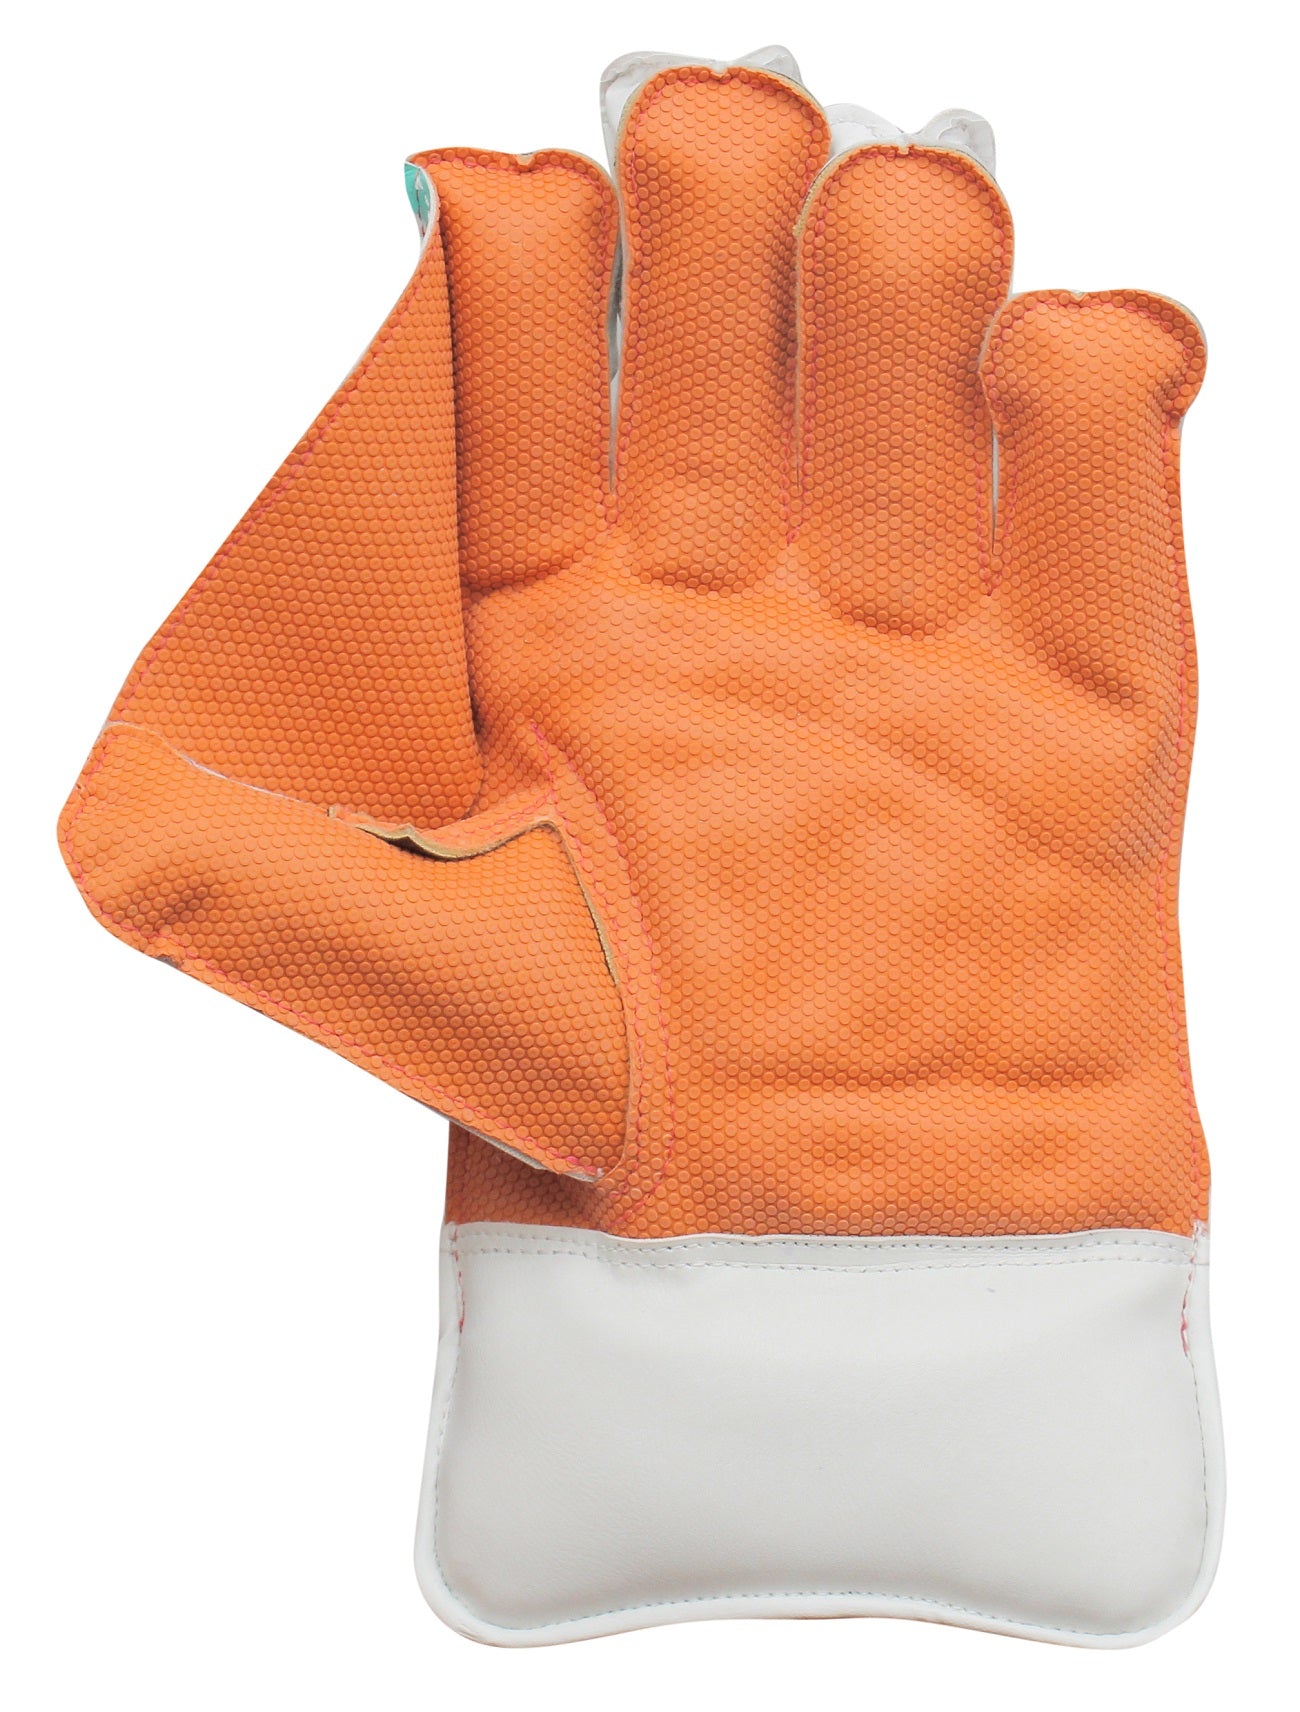 Whitedot Eleanor Wicket Keeping Gloves - Whitedot Sports